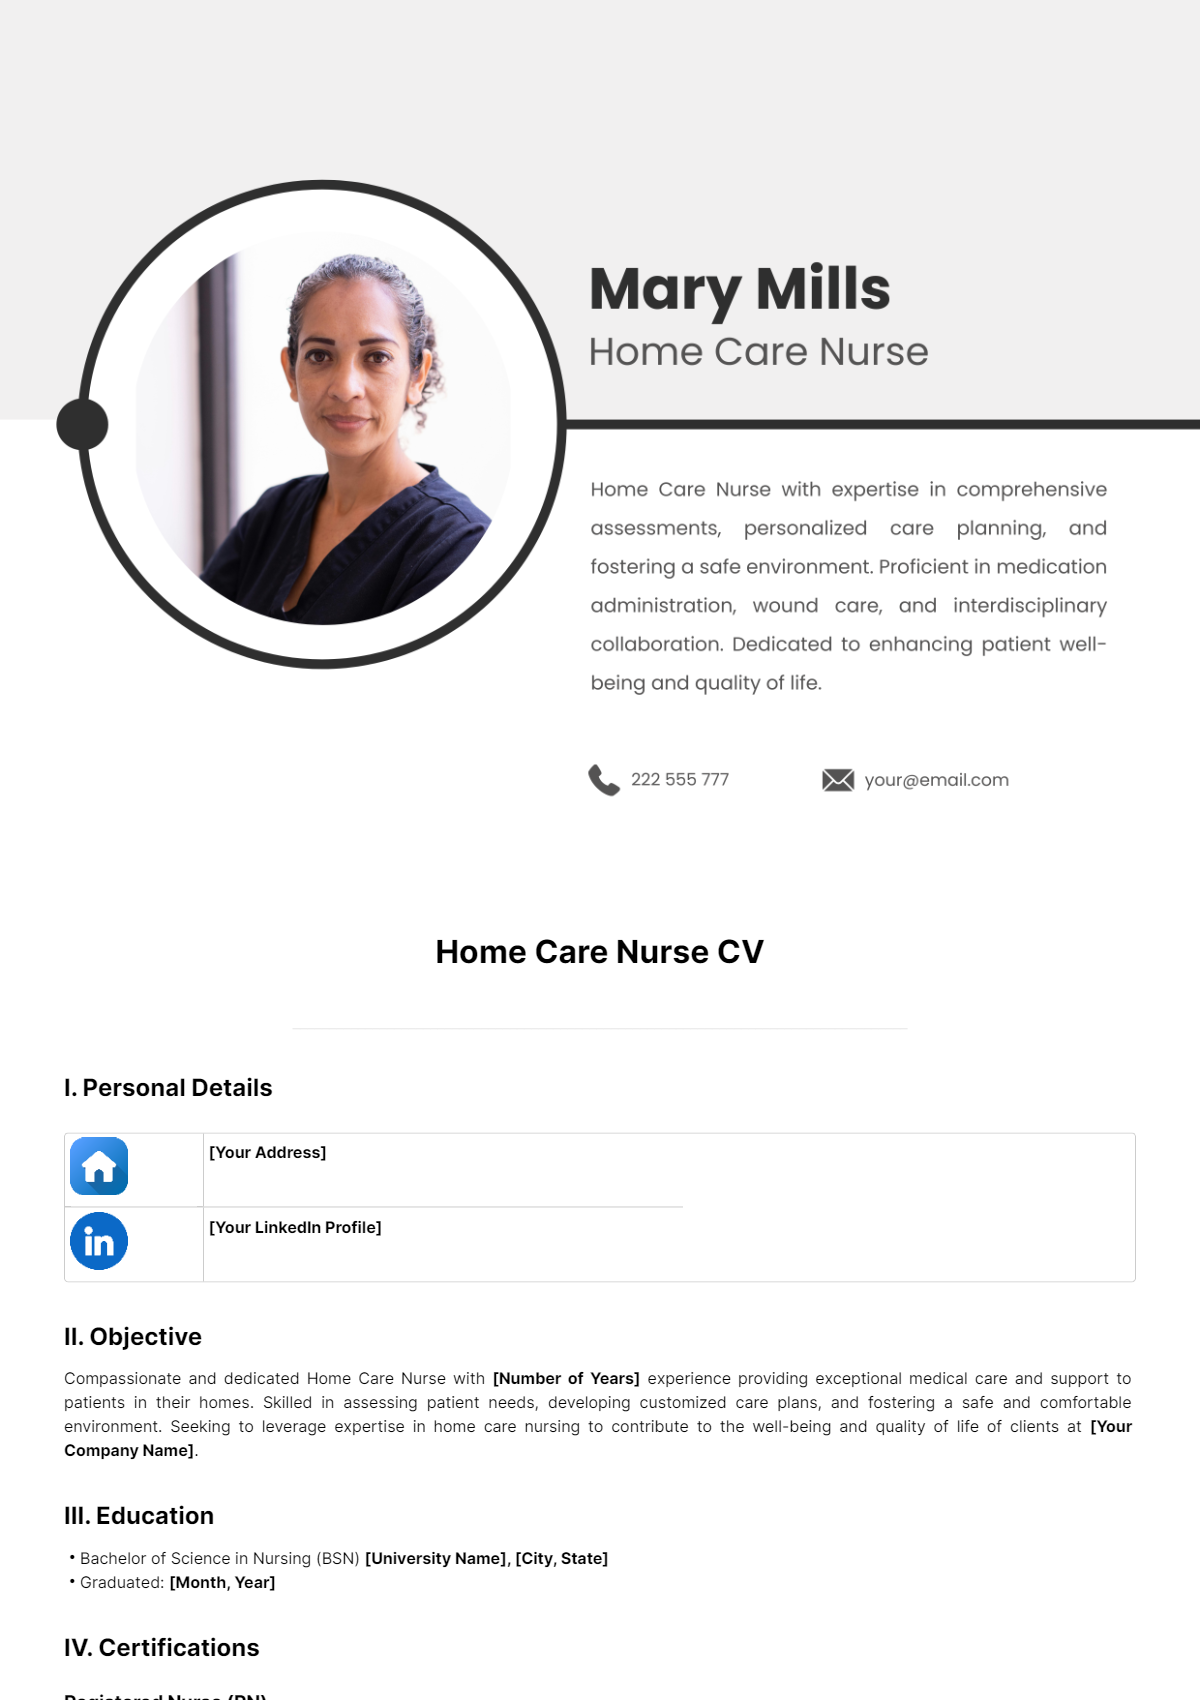 Free Home Care Nurse CV Template